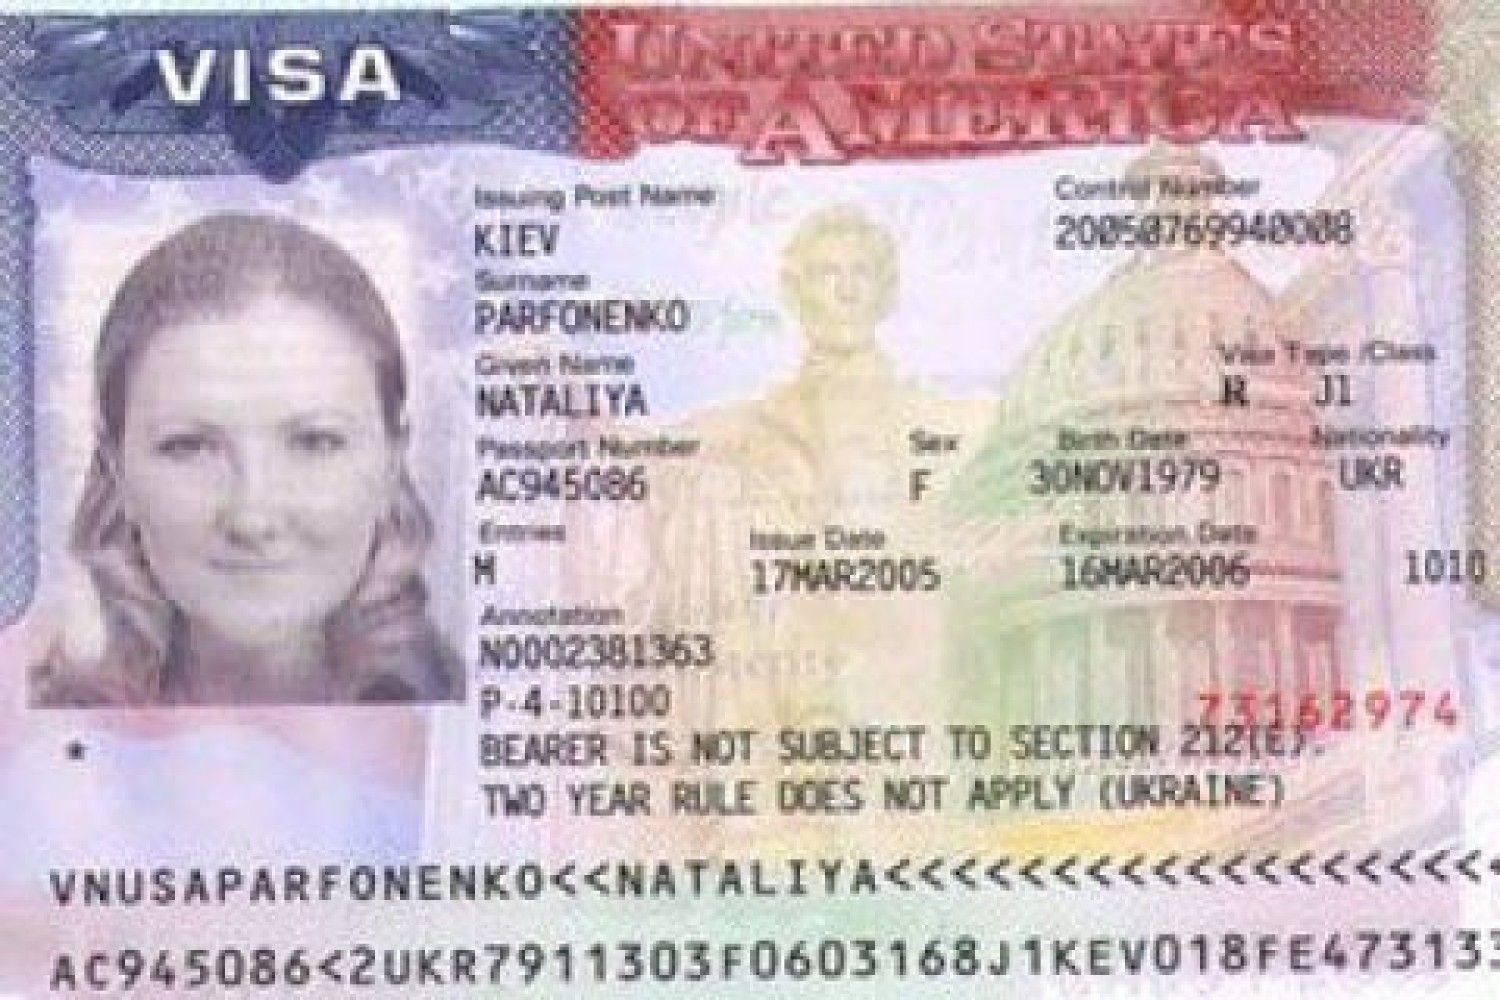 USA visa number